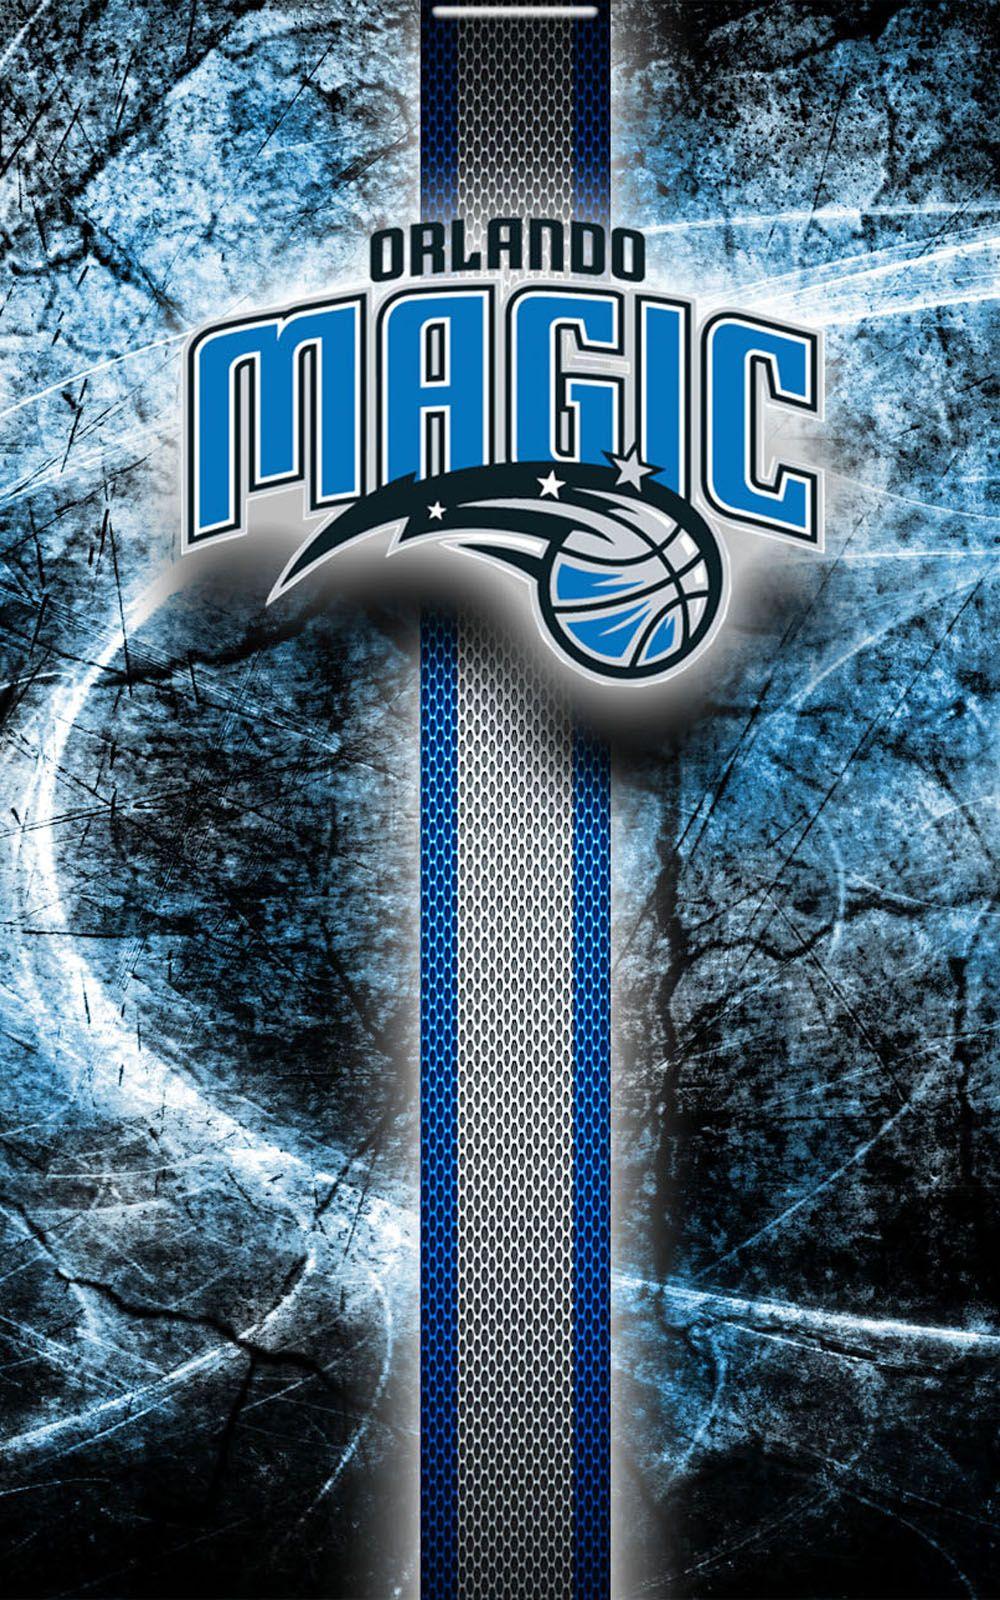 Orlando magic | Orlando magic, Sports wallpapers, Orlando magic basketball